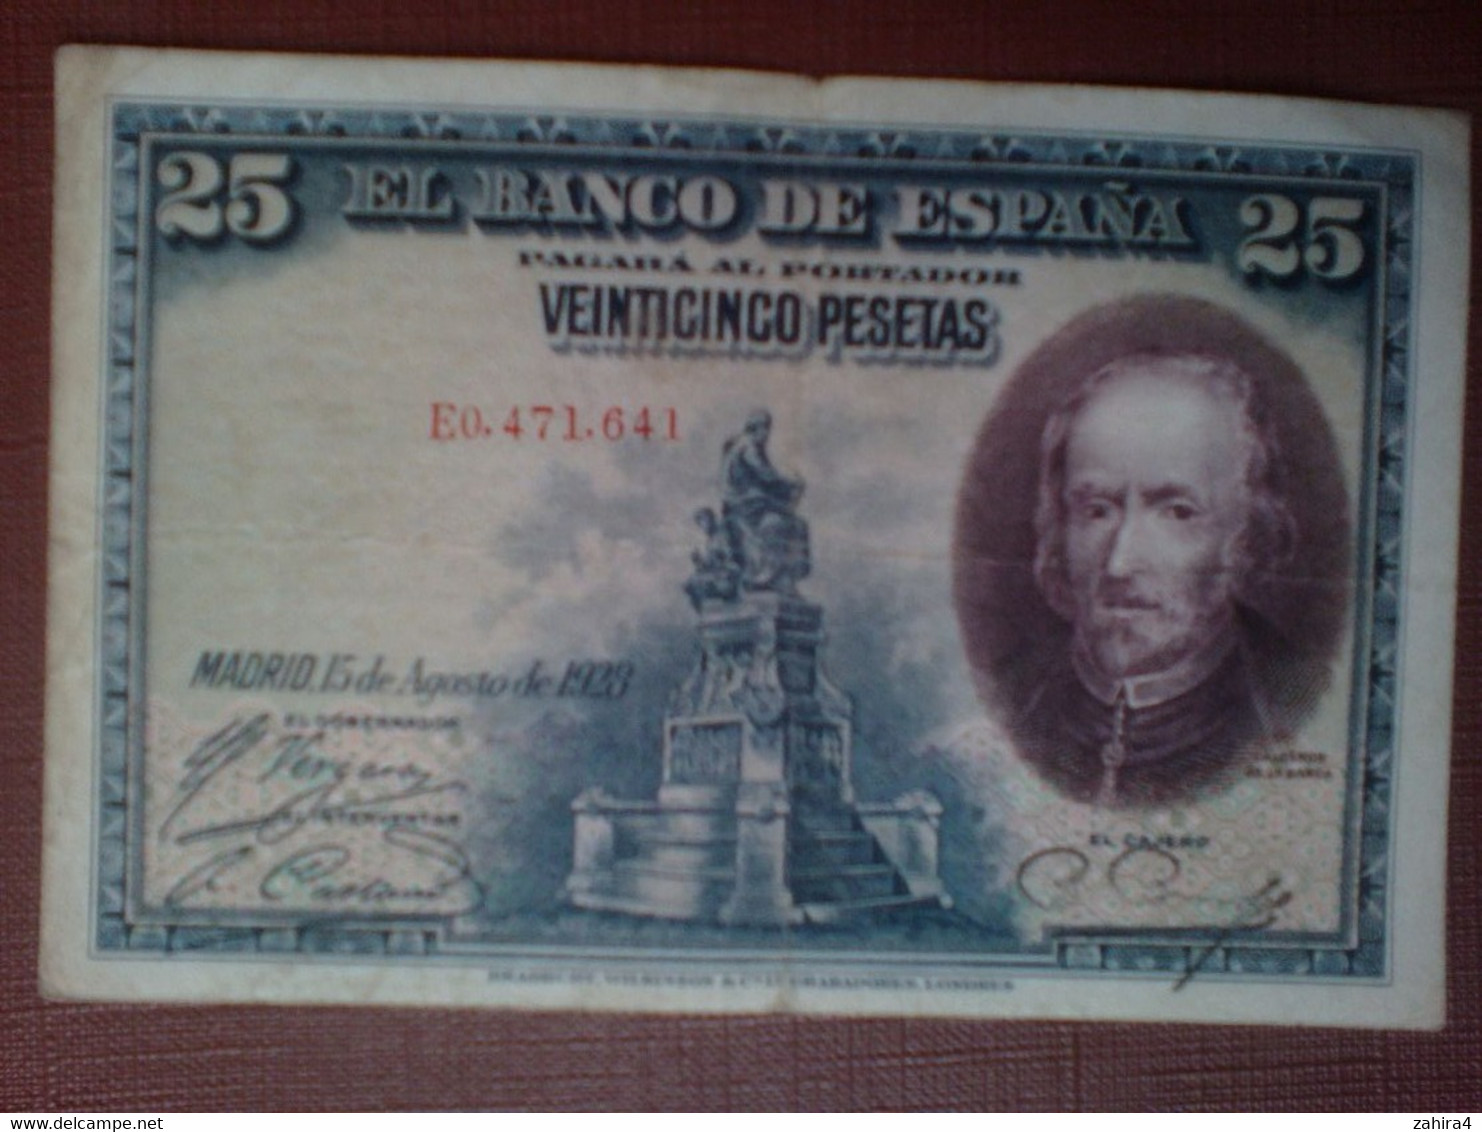 25 Pesetas - El Banco De Espana - E0,471,641 - Madrid 15 De Agosto De 1928 - Calderon De La Barca - 1-2-5-25 Pesetas